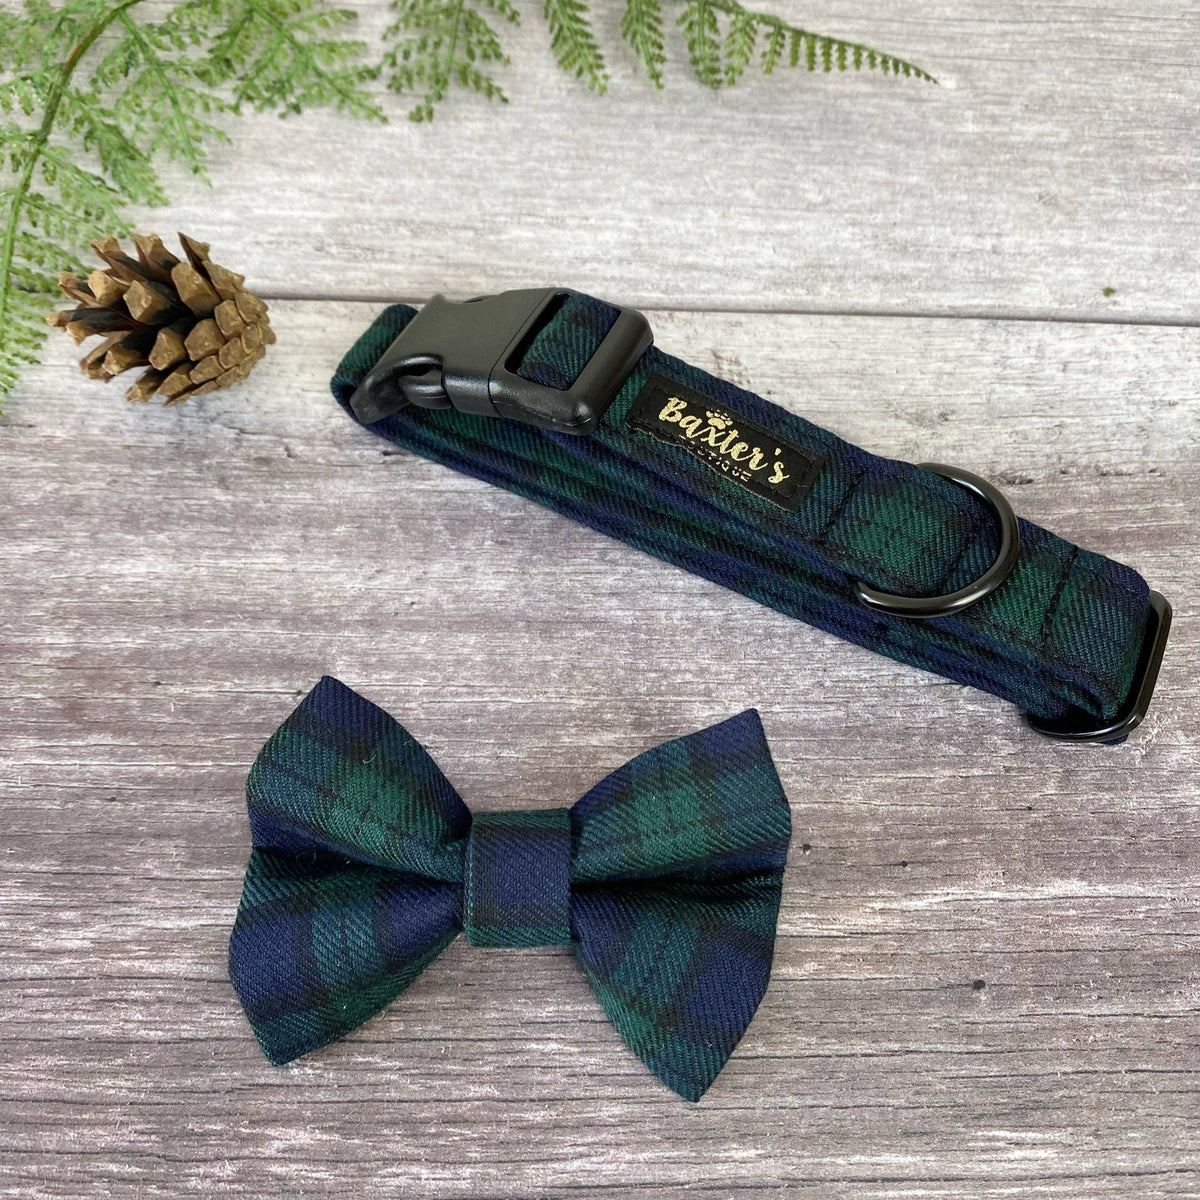 Baxter's Boutique - Bow Tie | Black Watch Tartan